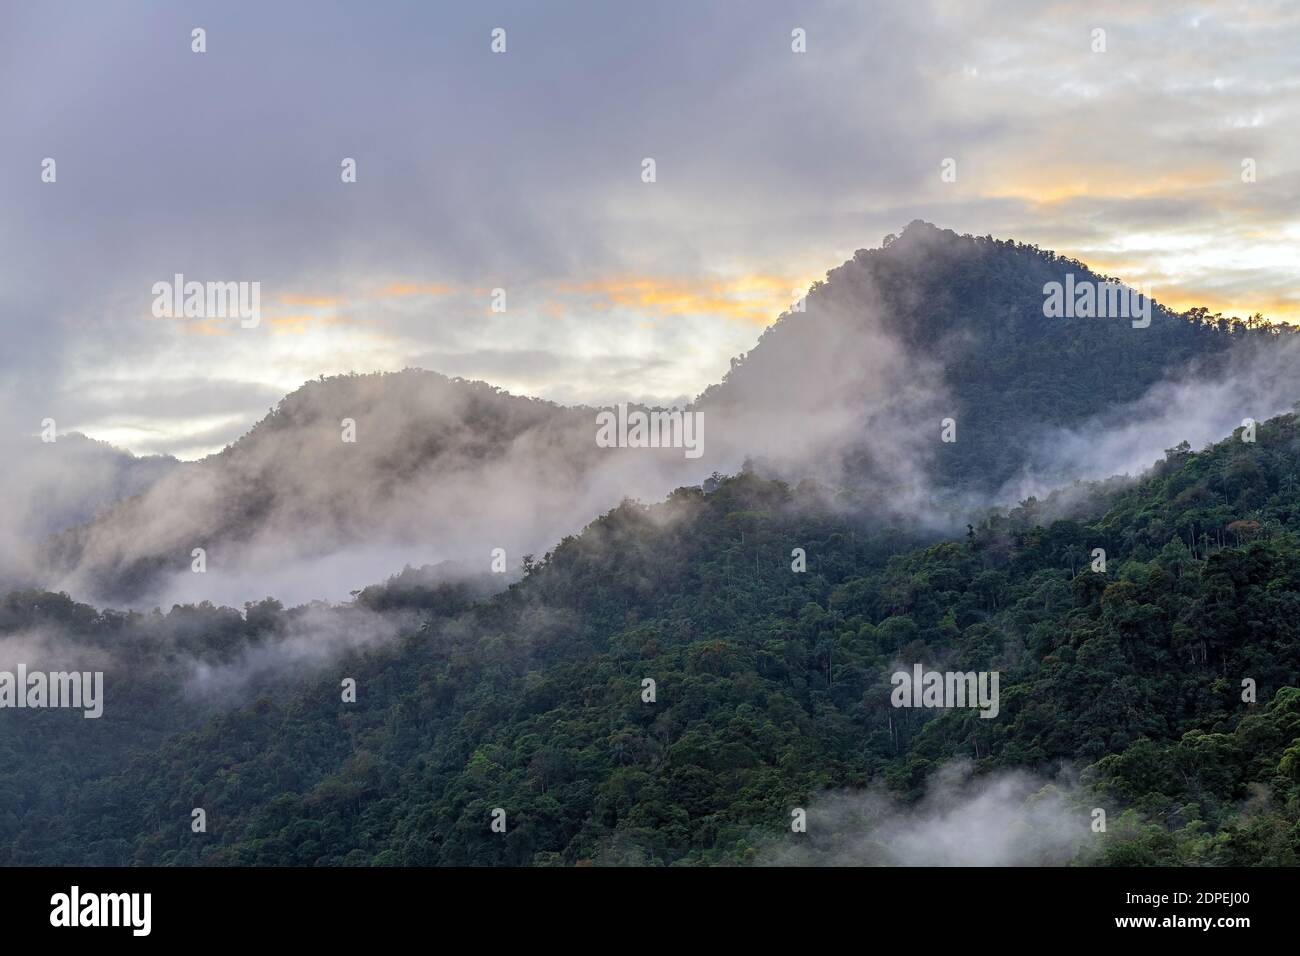 Sunrise landscape in the cloud forest of Mindo, Ecuador. Stock Photo